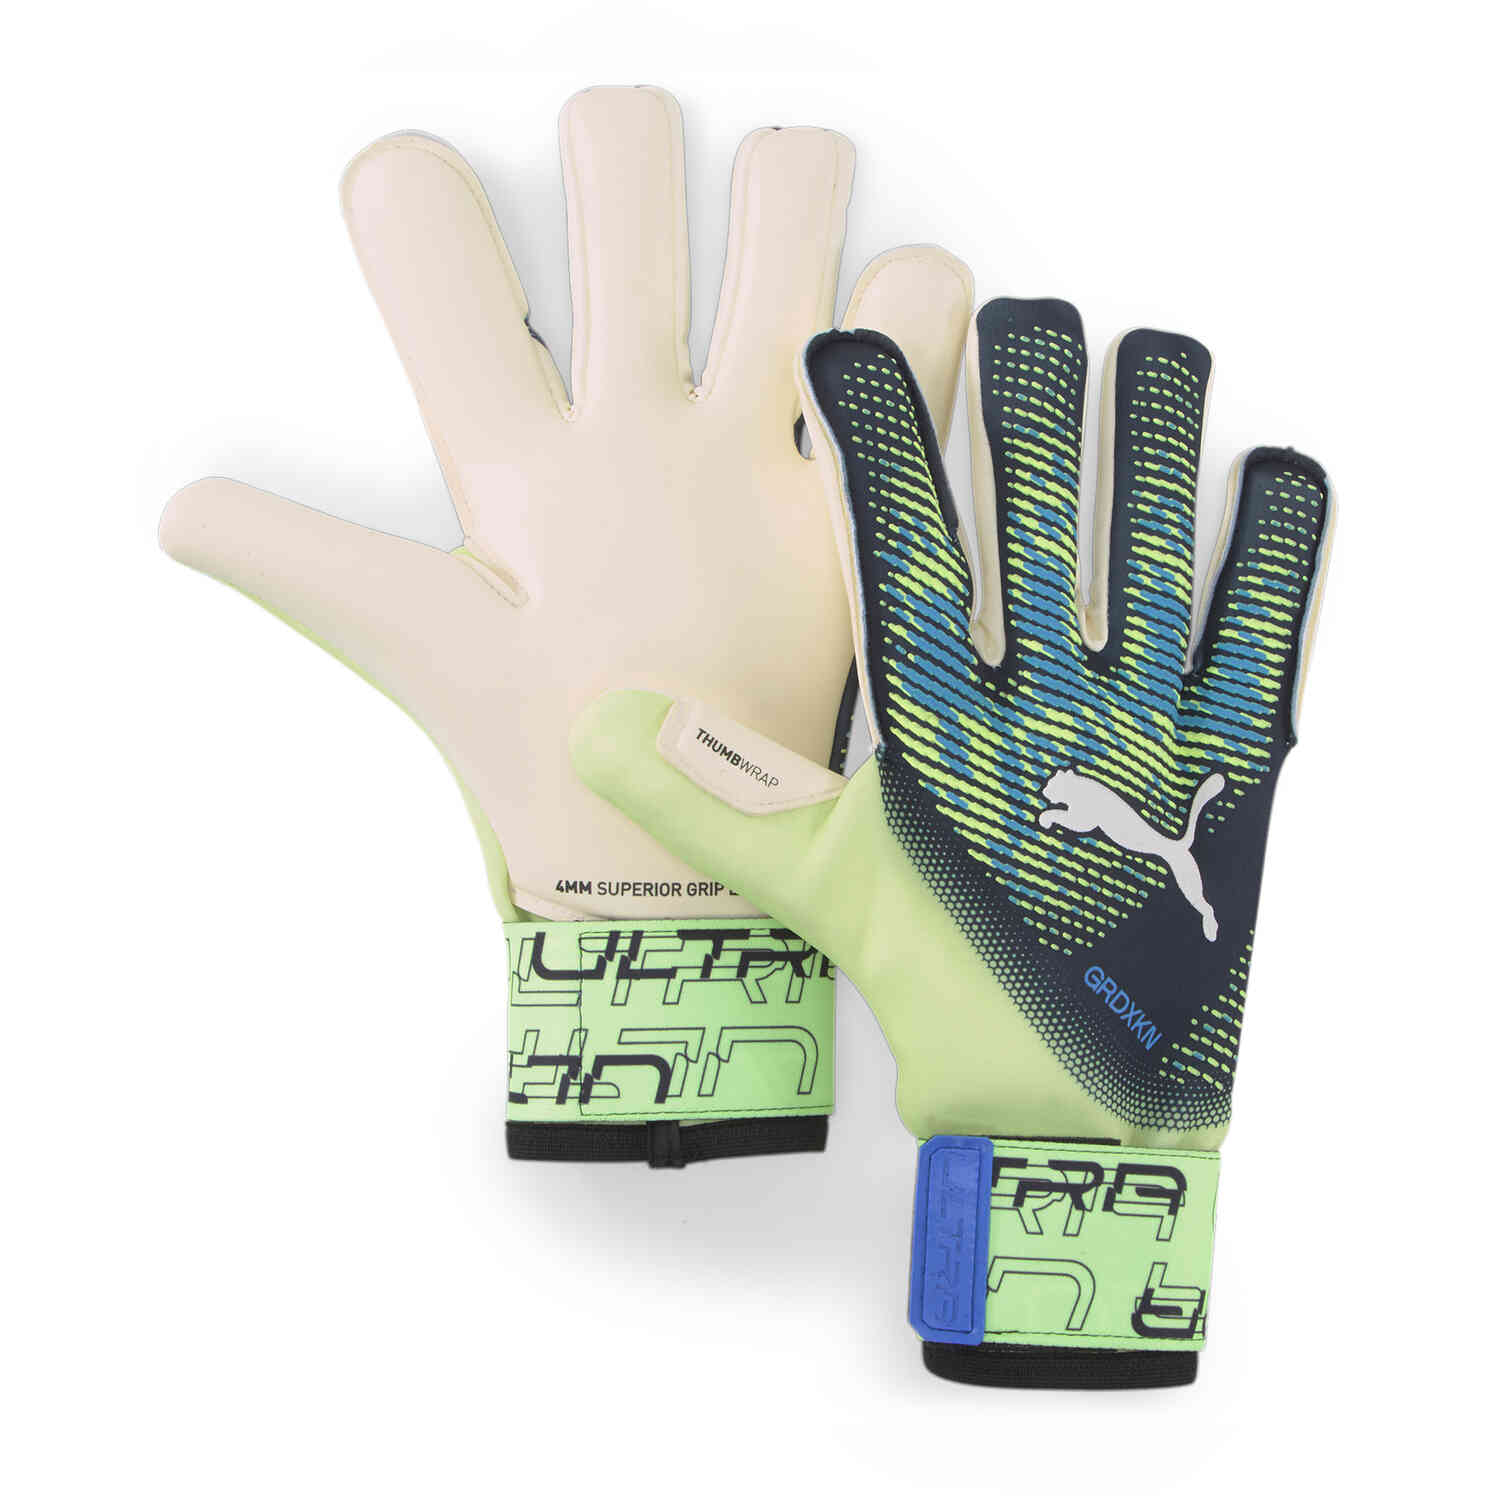 PUMA Ultra Grip 1 Hybrid Cut Goalkeeper Gloves - Fastest Pack - SoccerPro